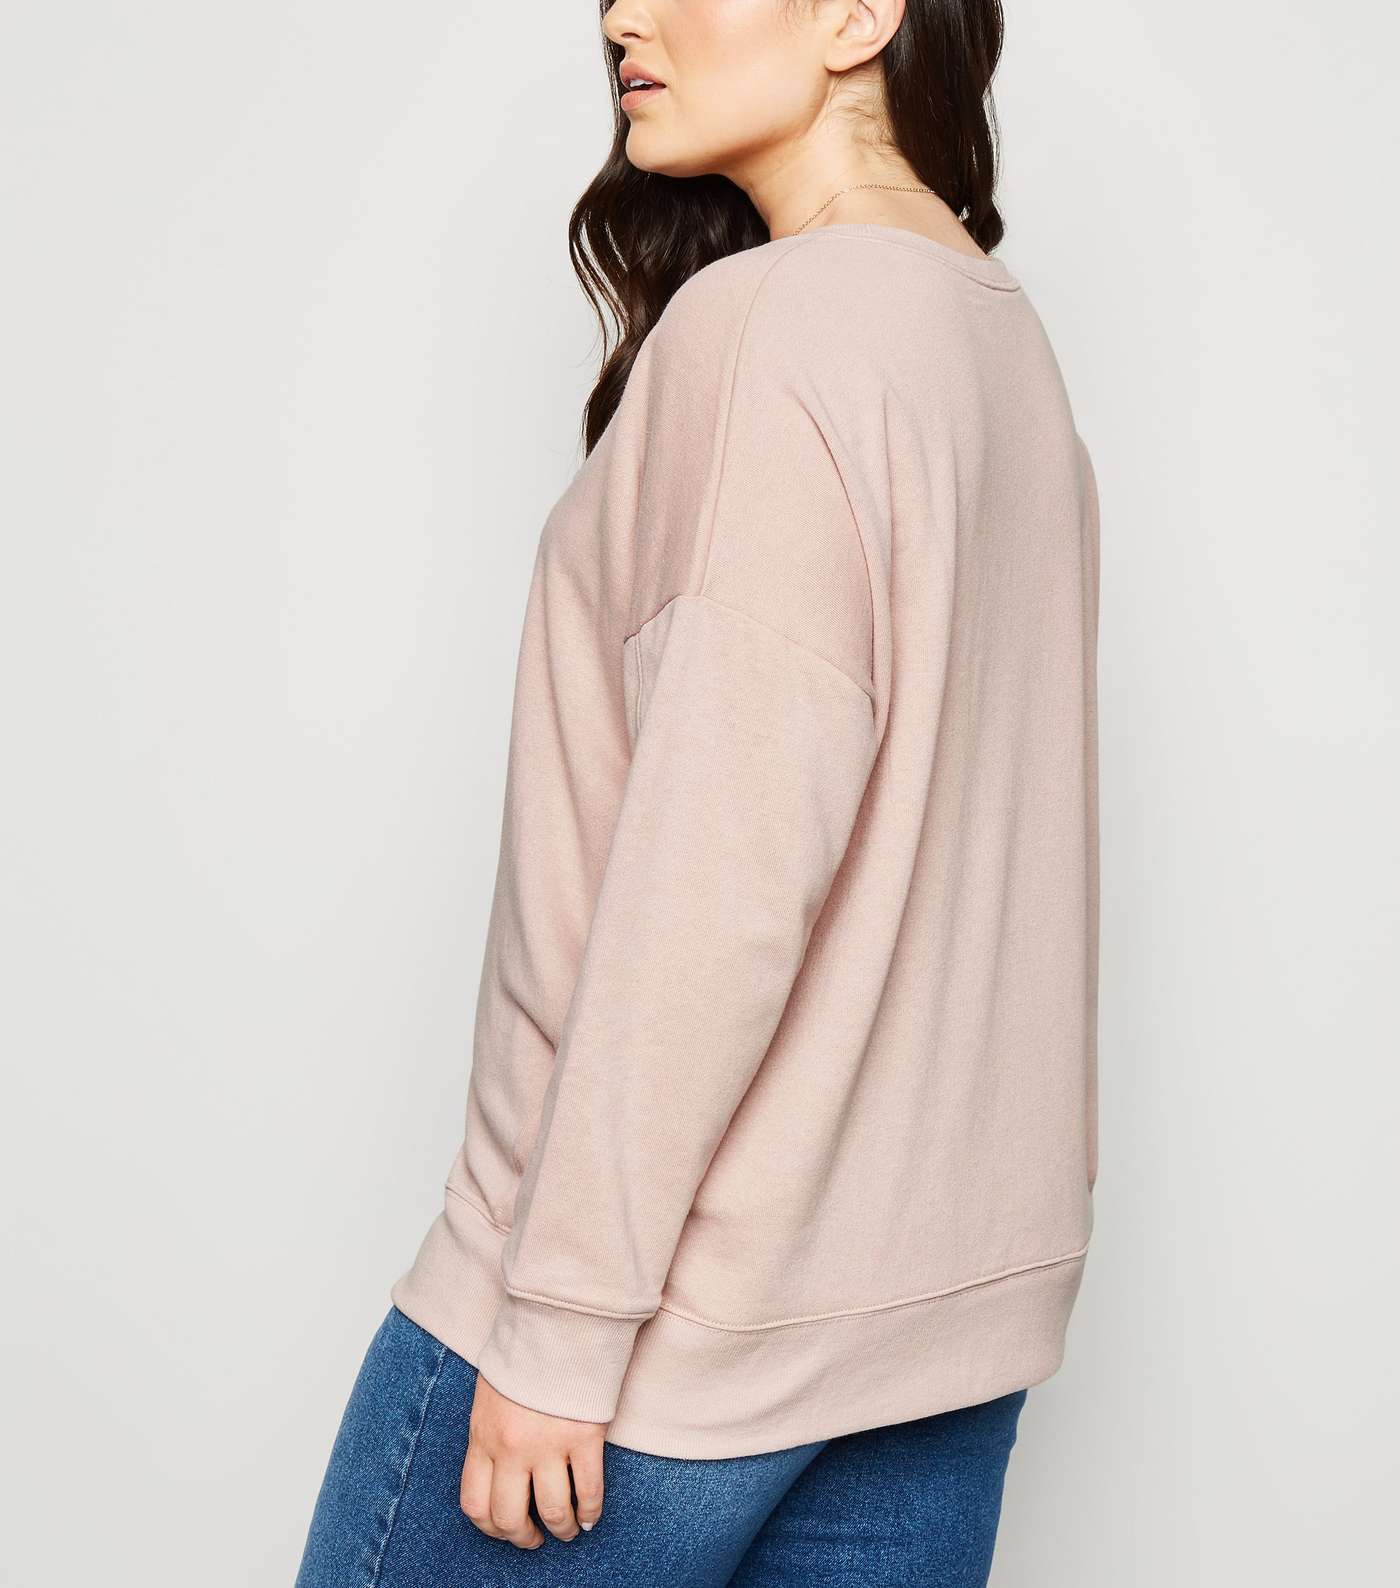 Curves Pale Pink Sweatshirt Image 3